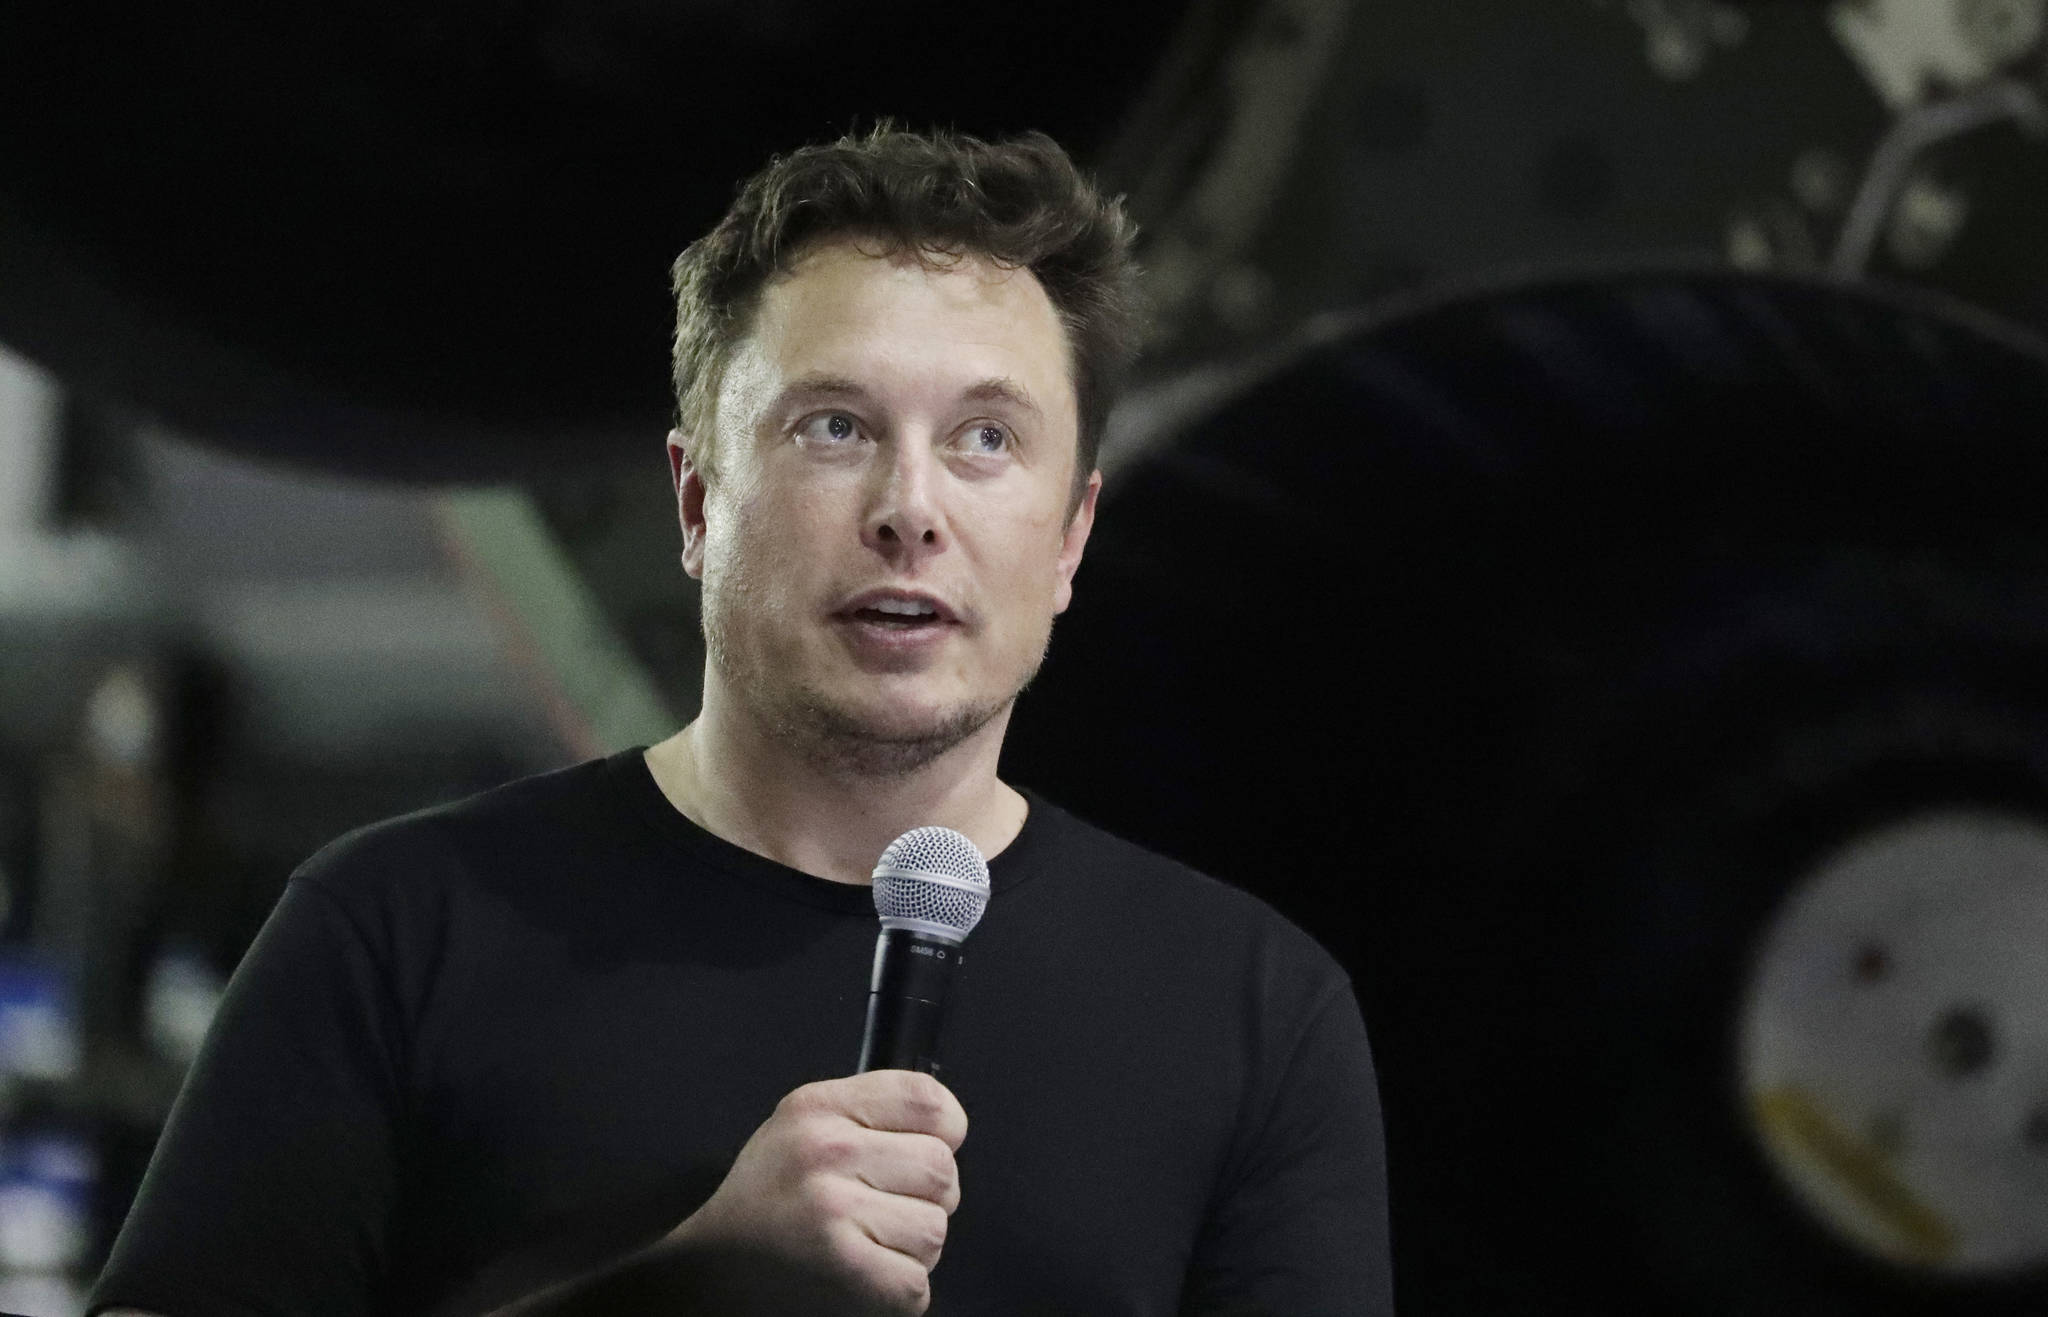 SEC seeks to oust Tesla CEO Elon Musk over go-private tweet